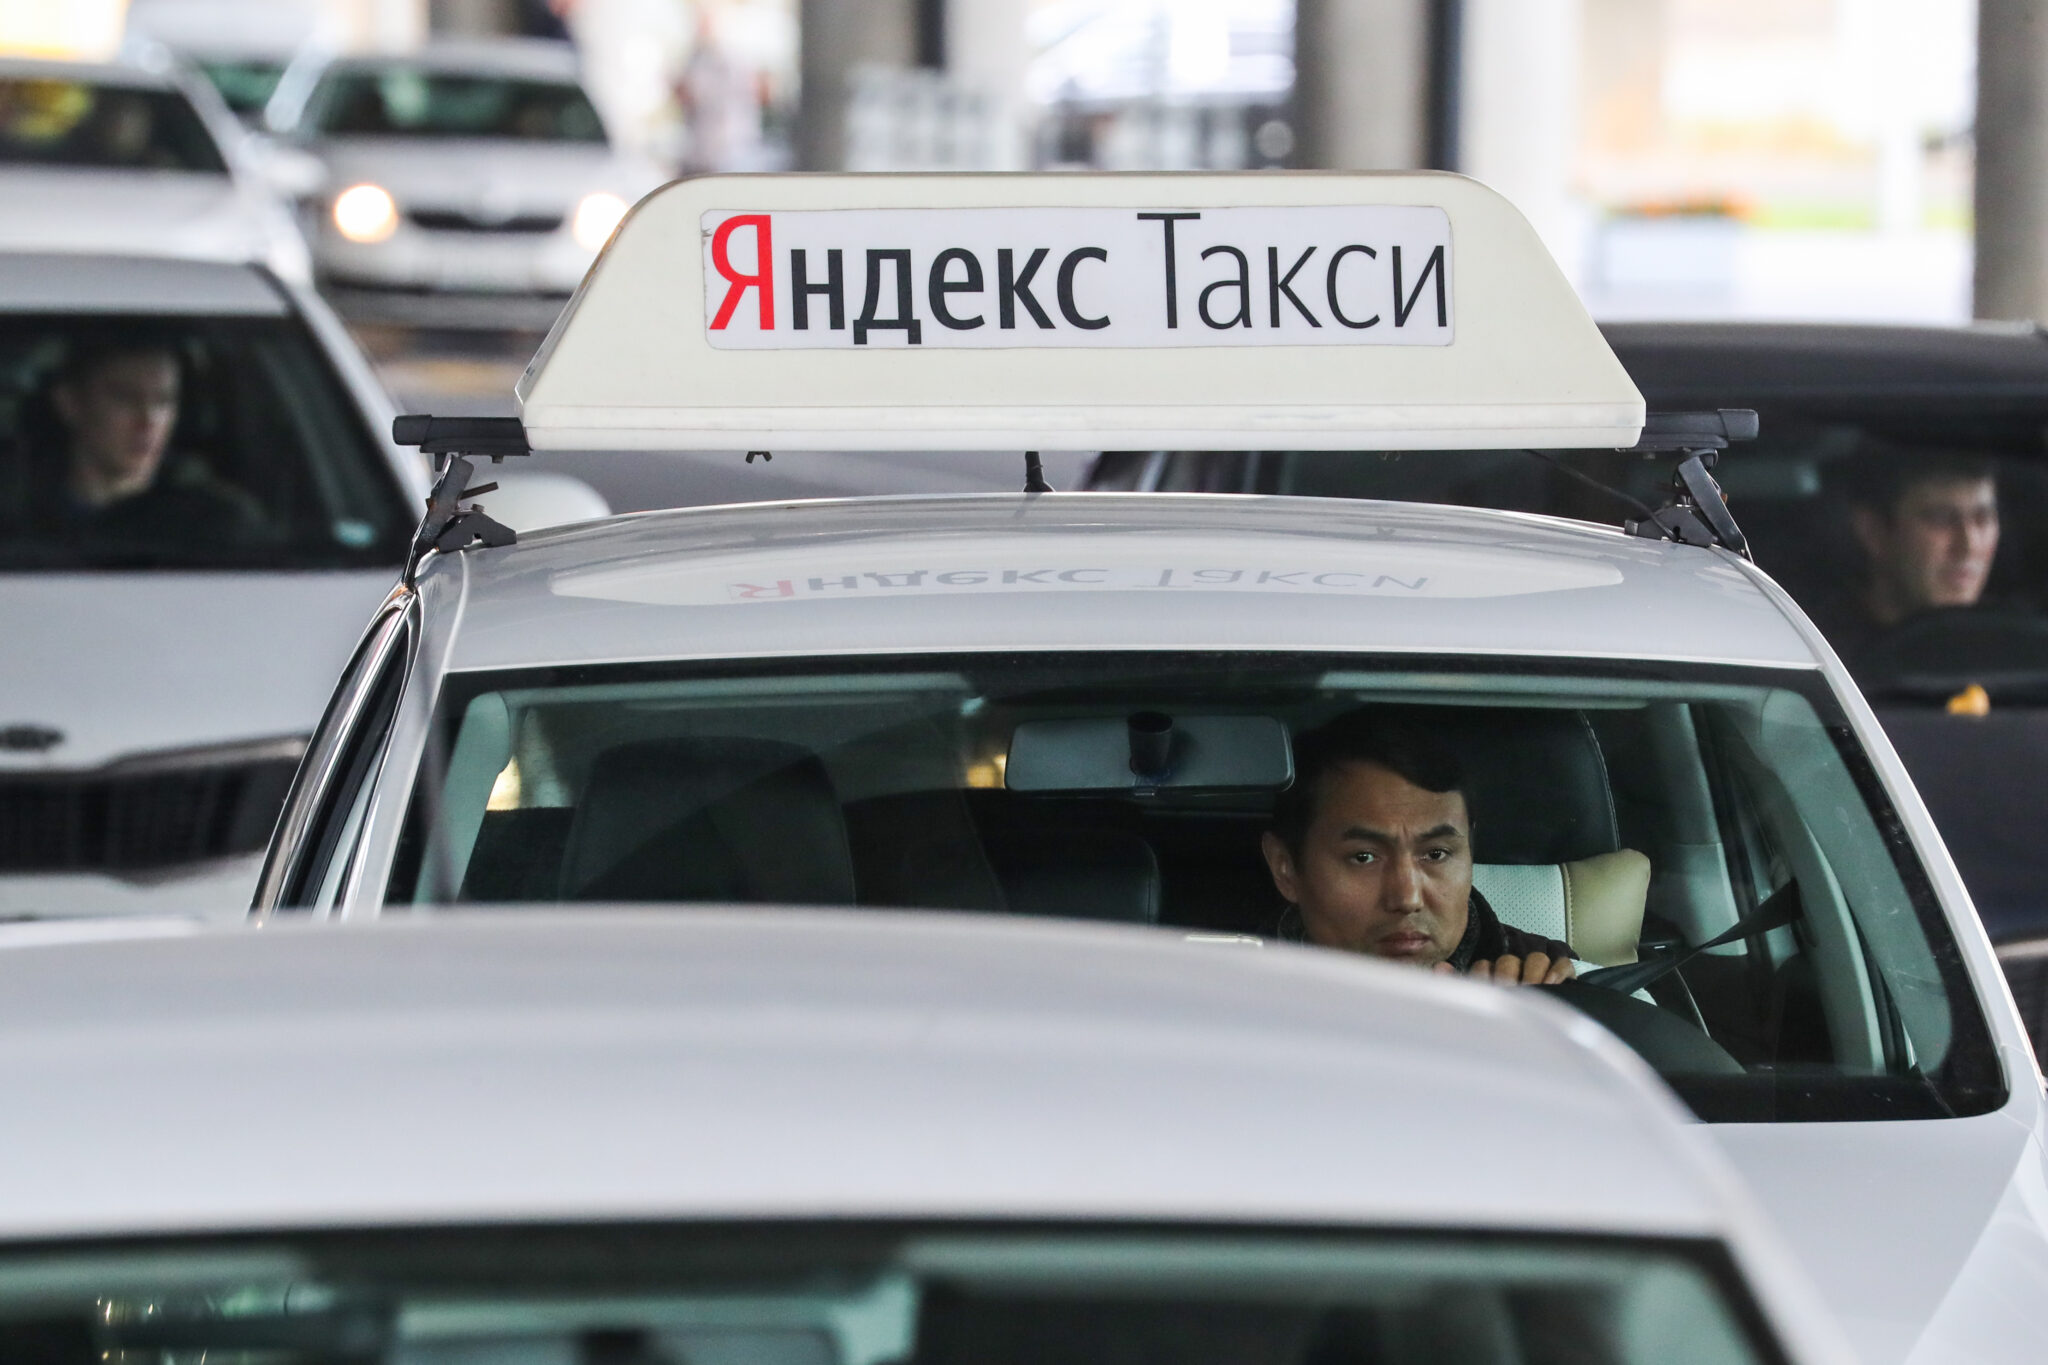 Яндекс такси. Фото Peter Kovalev / TASS / Scanpix / Leta